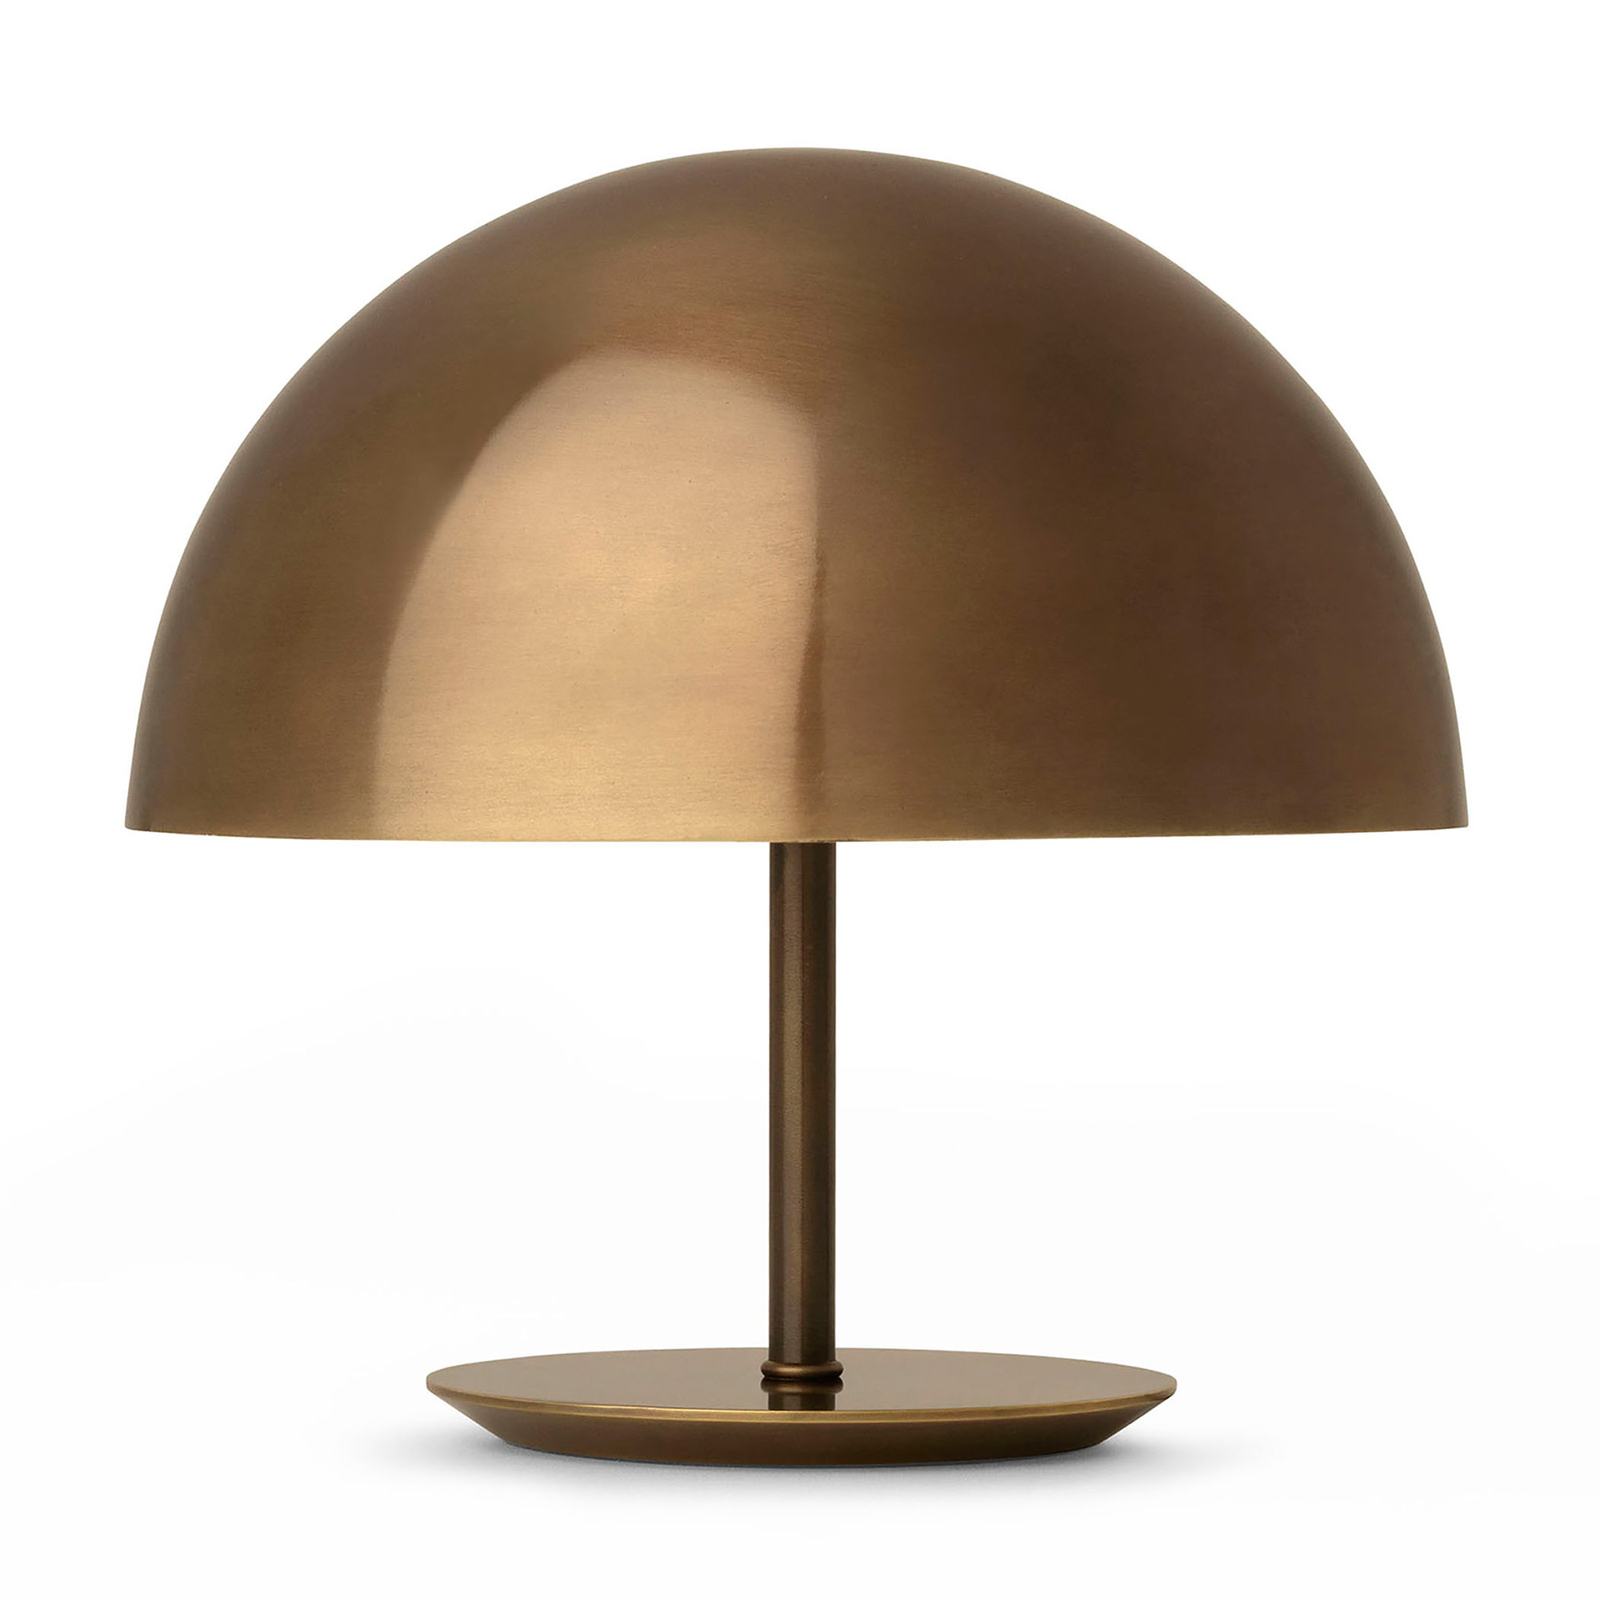 Mater Baby Dome bordslampa, Ø 25 cm av mässing